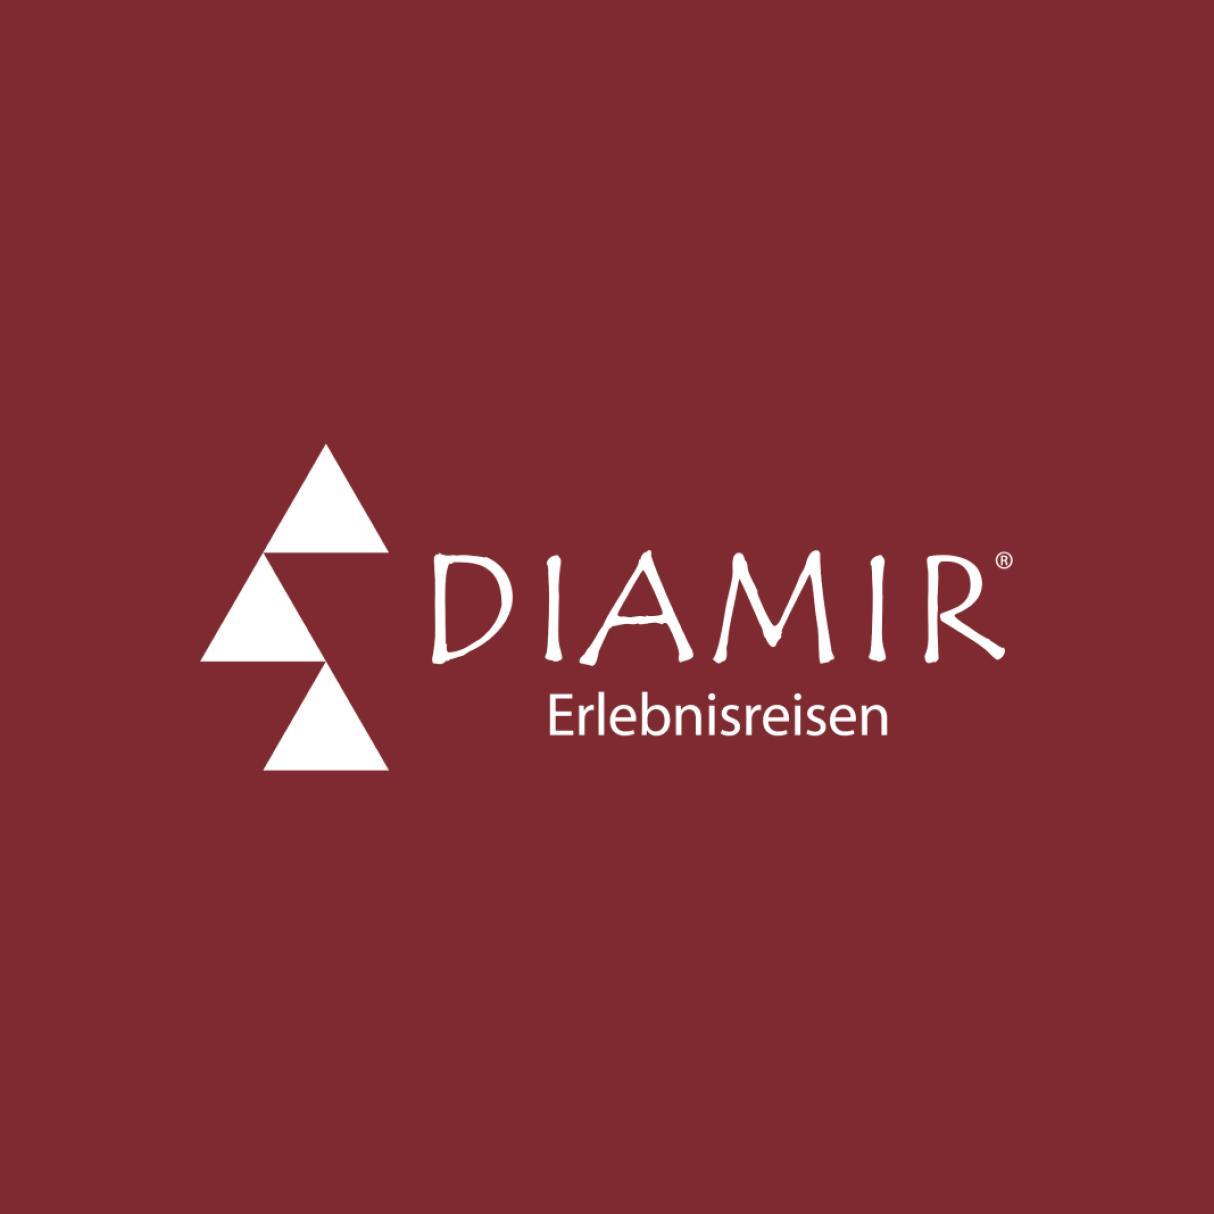 DIAMIR Erlebnisreisen logo